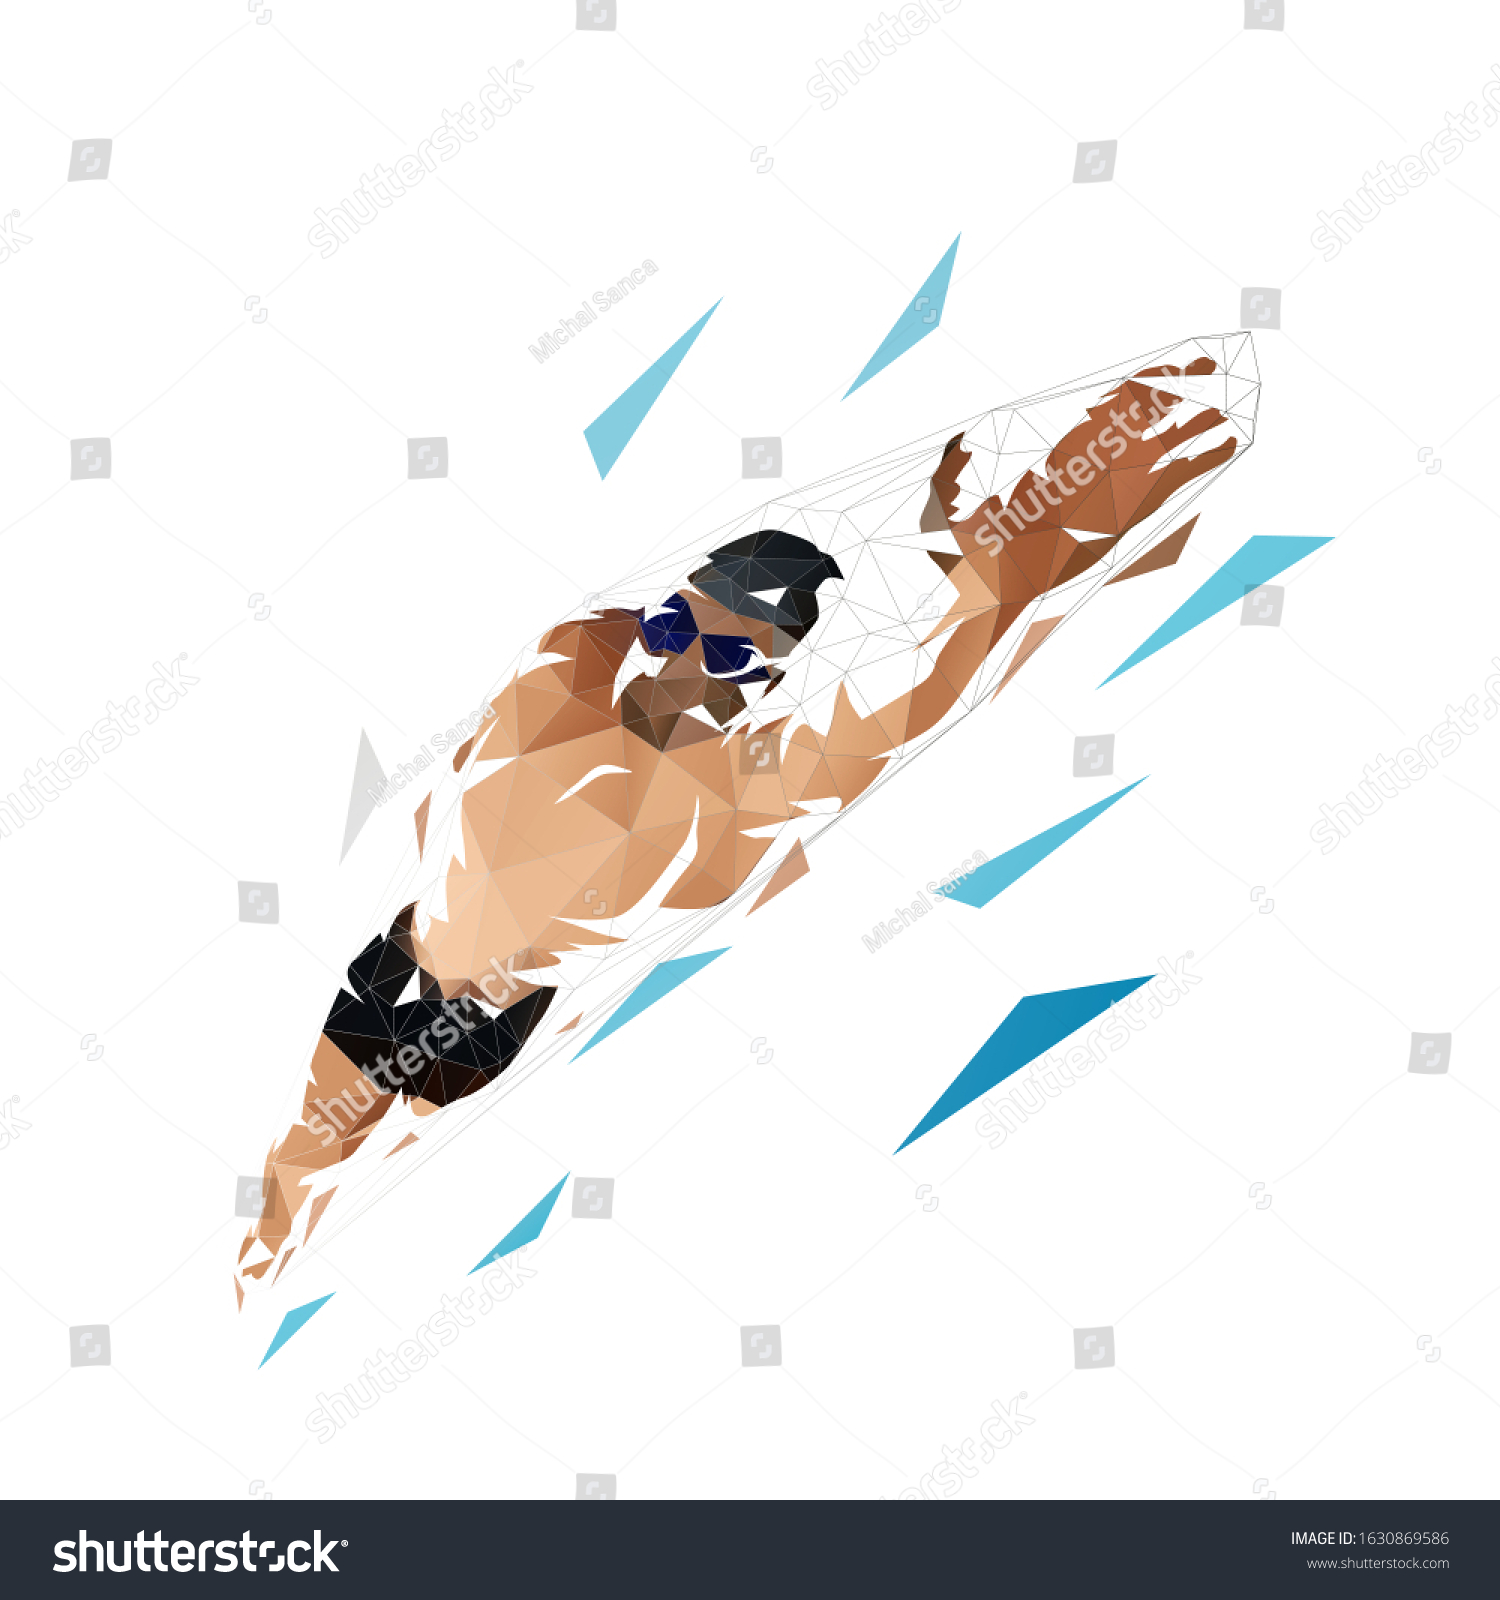 576 Geometric swimmer Images, Stock Photos & Vectors | Shutterstock